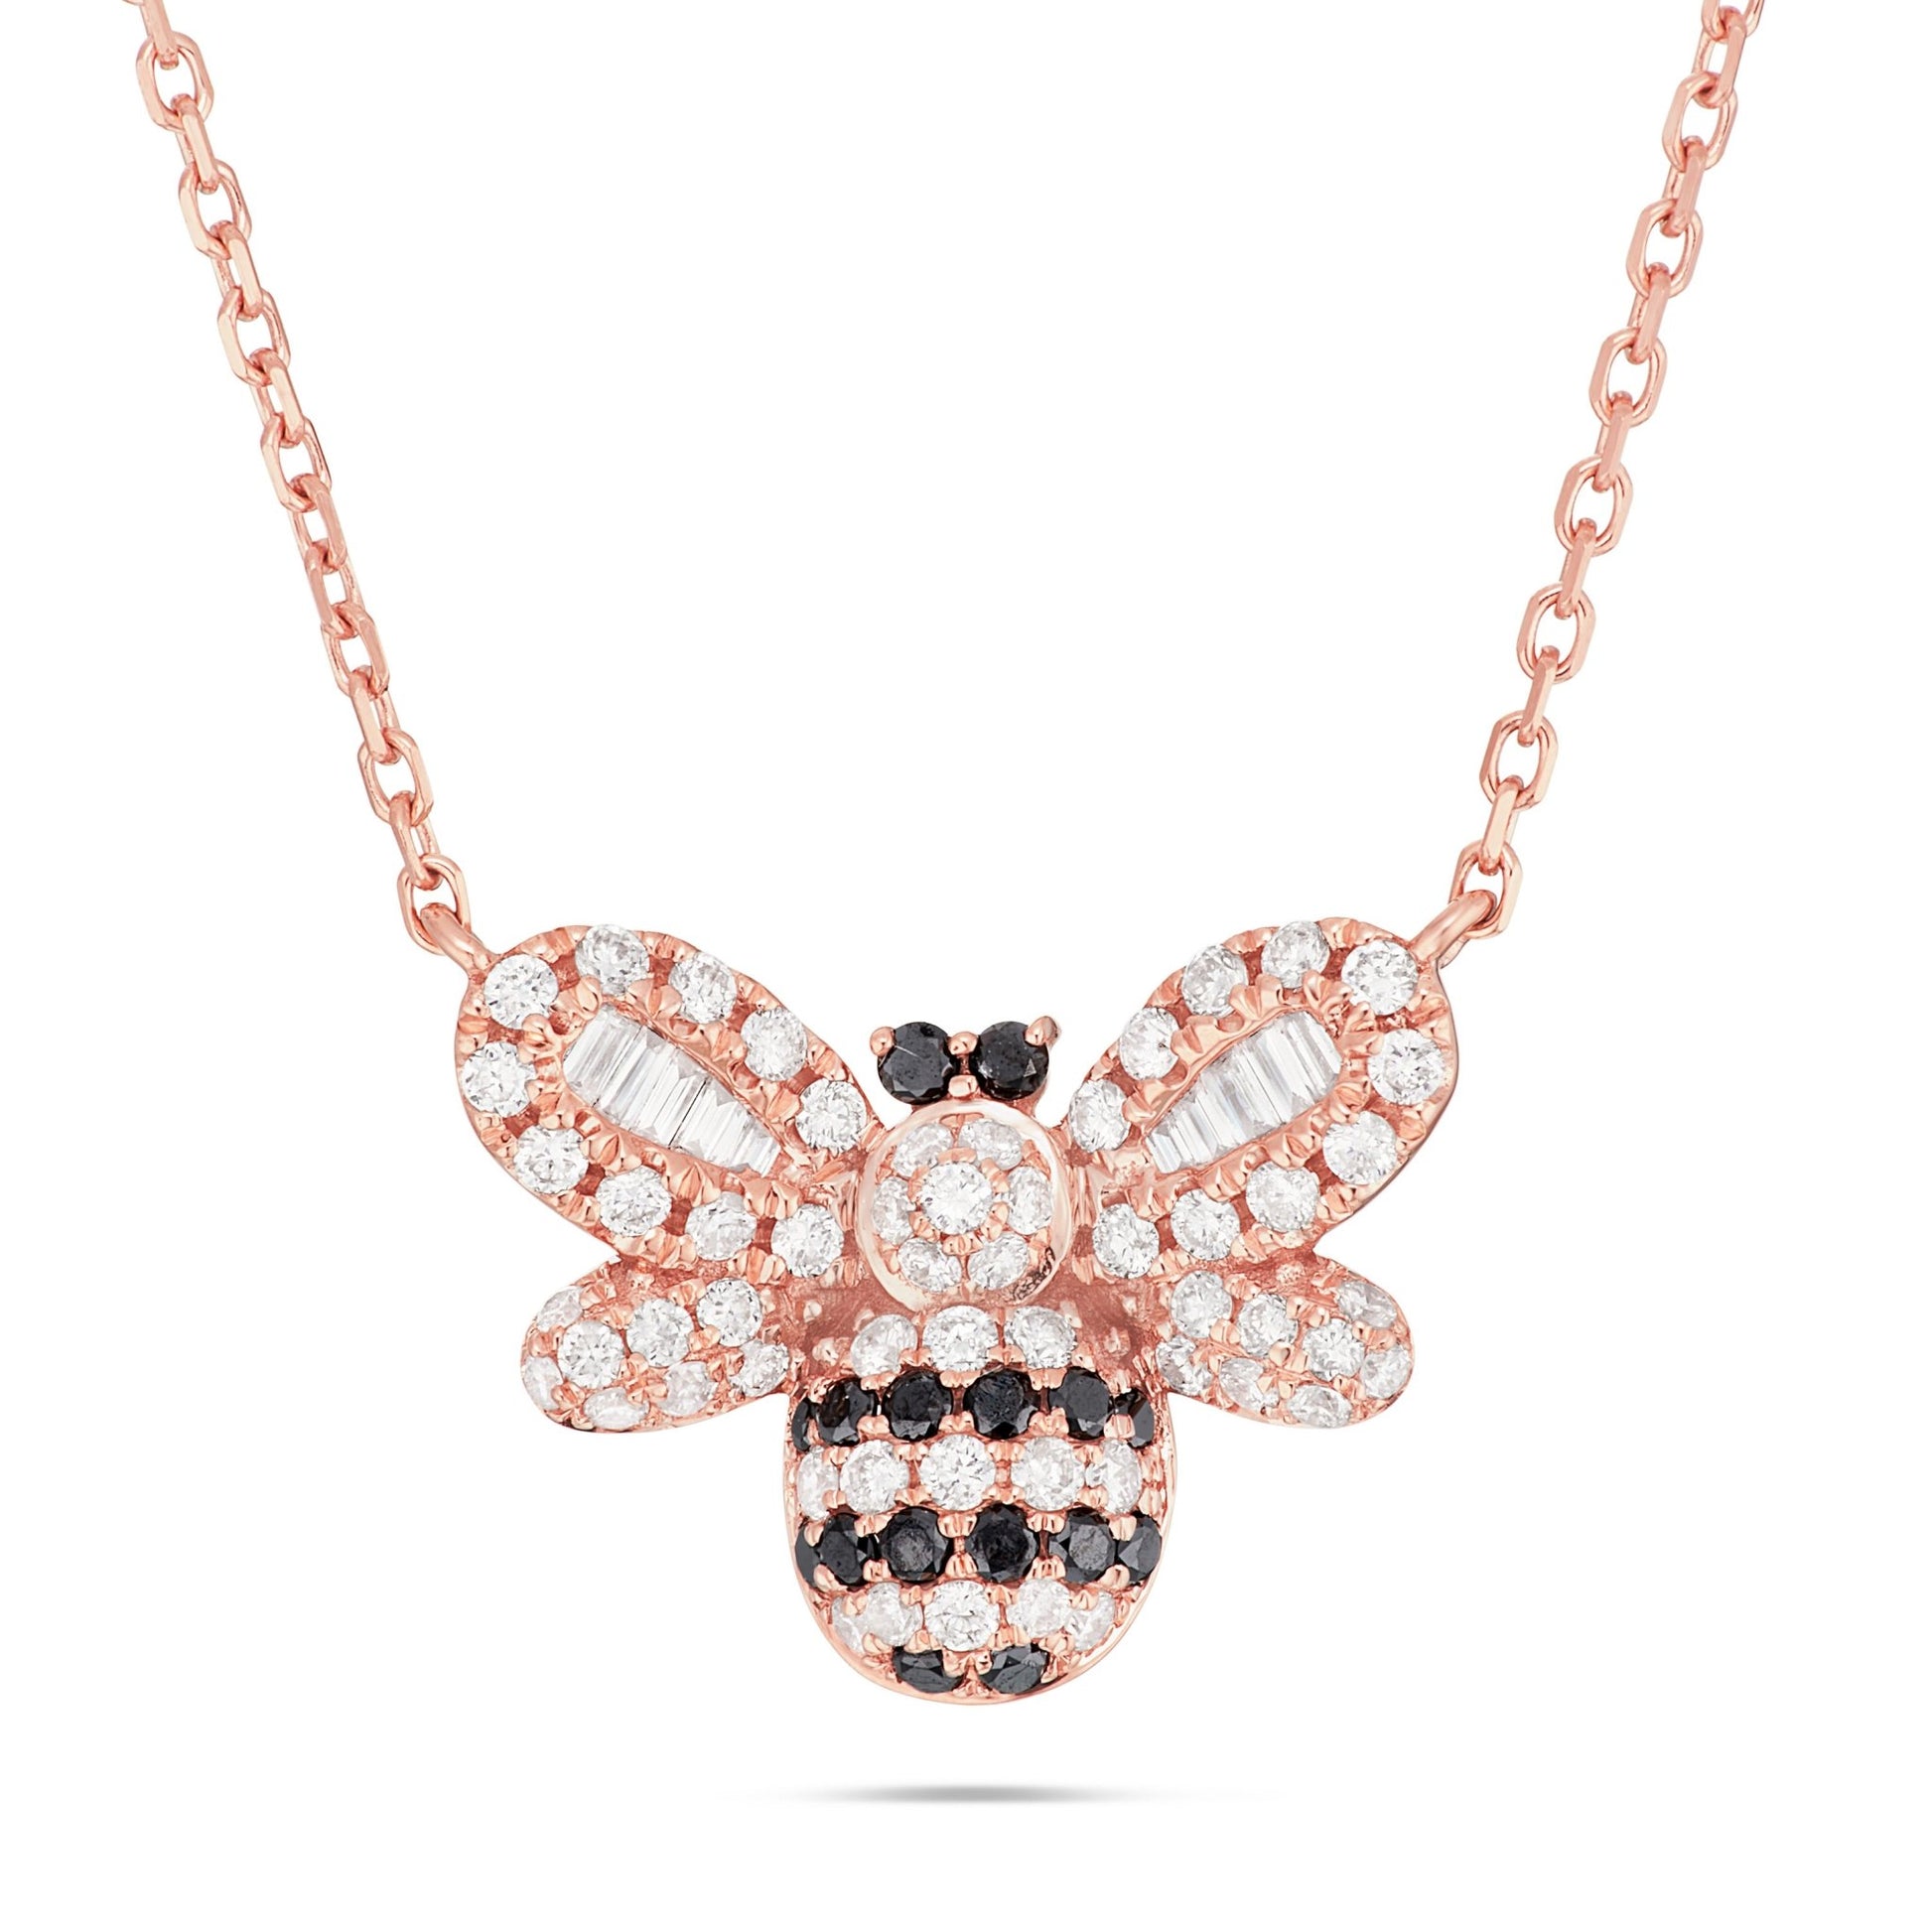 Bumble Bee Diamond Necklace - Shyne Jewelers Rose Gold Shyne Jewelers